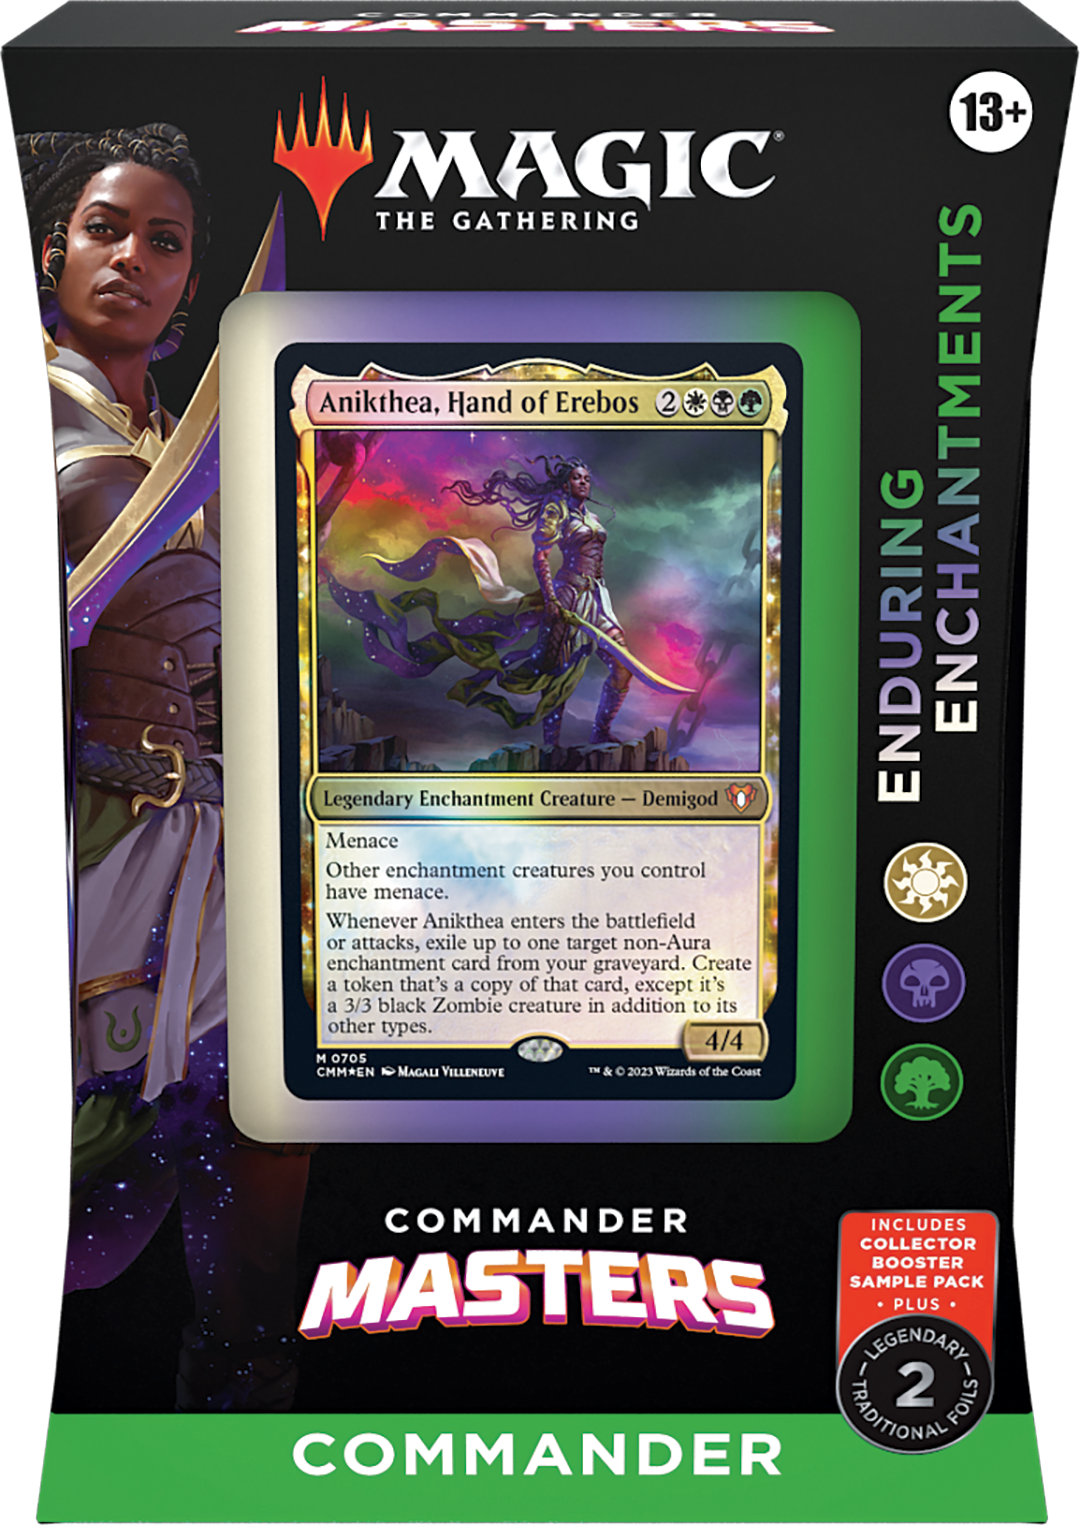 Commander Masters Enduring Enchantments (White-Black-Green) Commander Deck